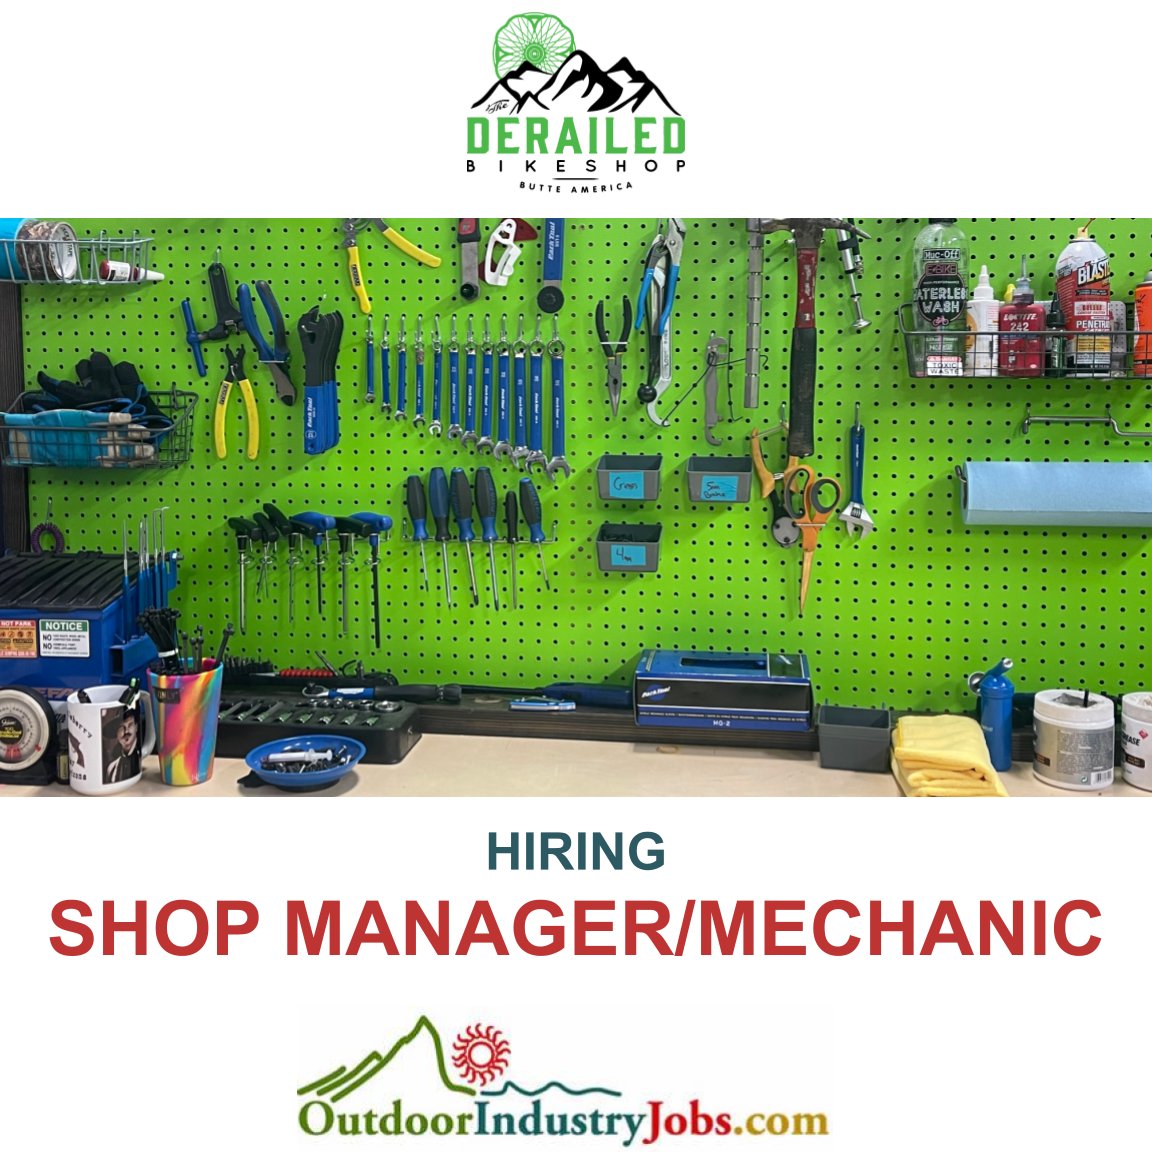 Apply Here: outdoorindustryjobs.com/JobDetail/GetJ…

#outdoorindustryjobs #bikemechanic #bikemechanics #biketech #hiringbikemechanic #hiring #hiringnow